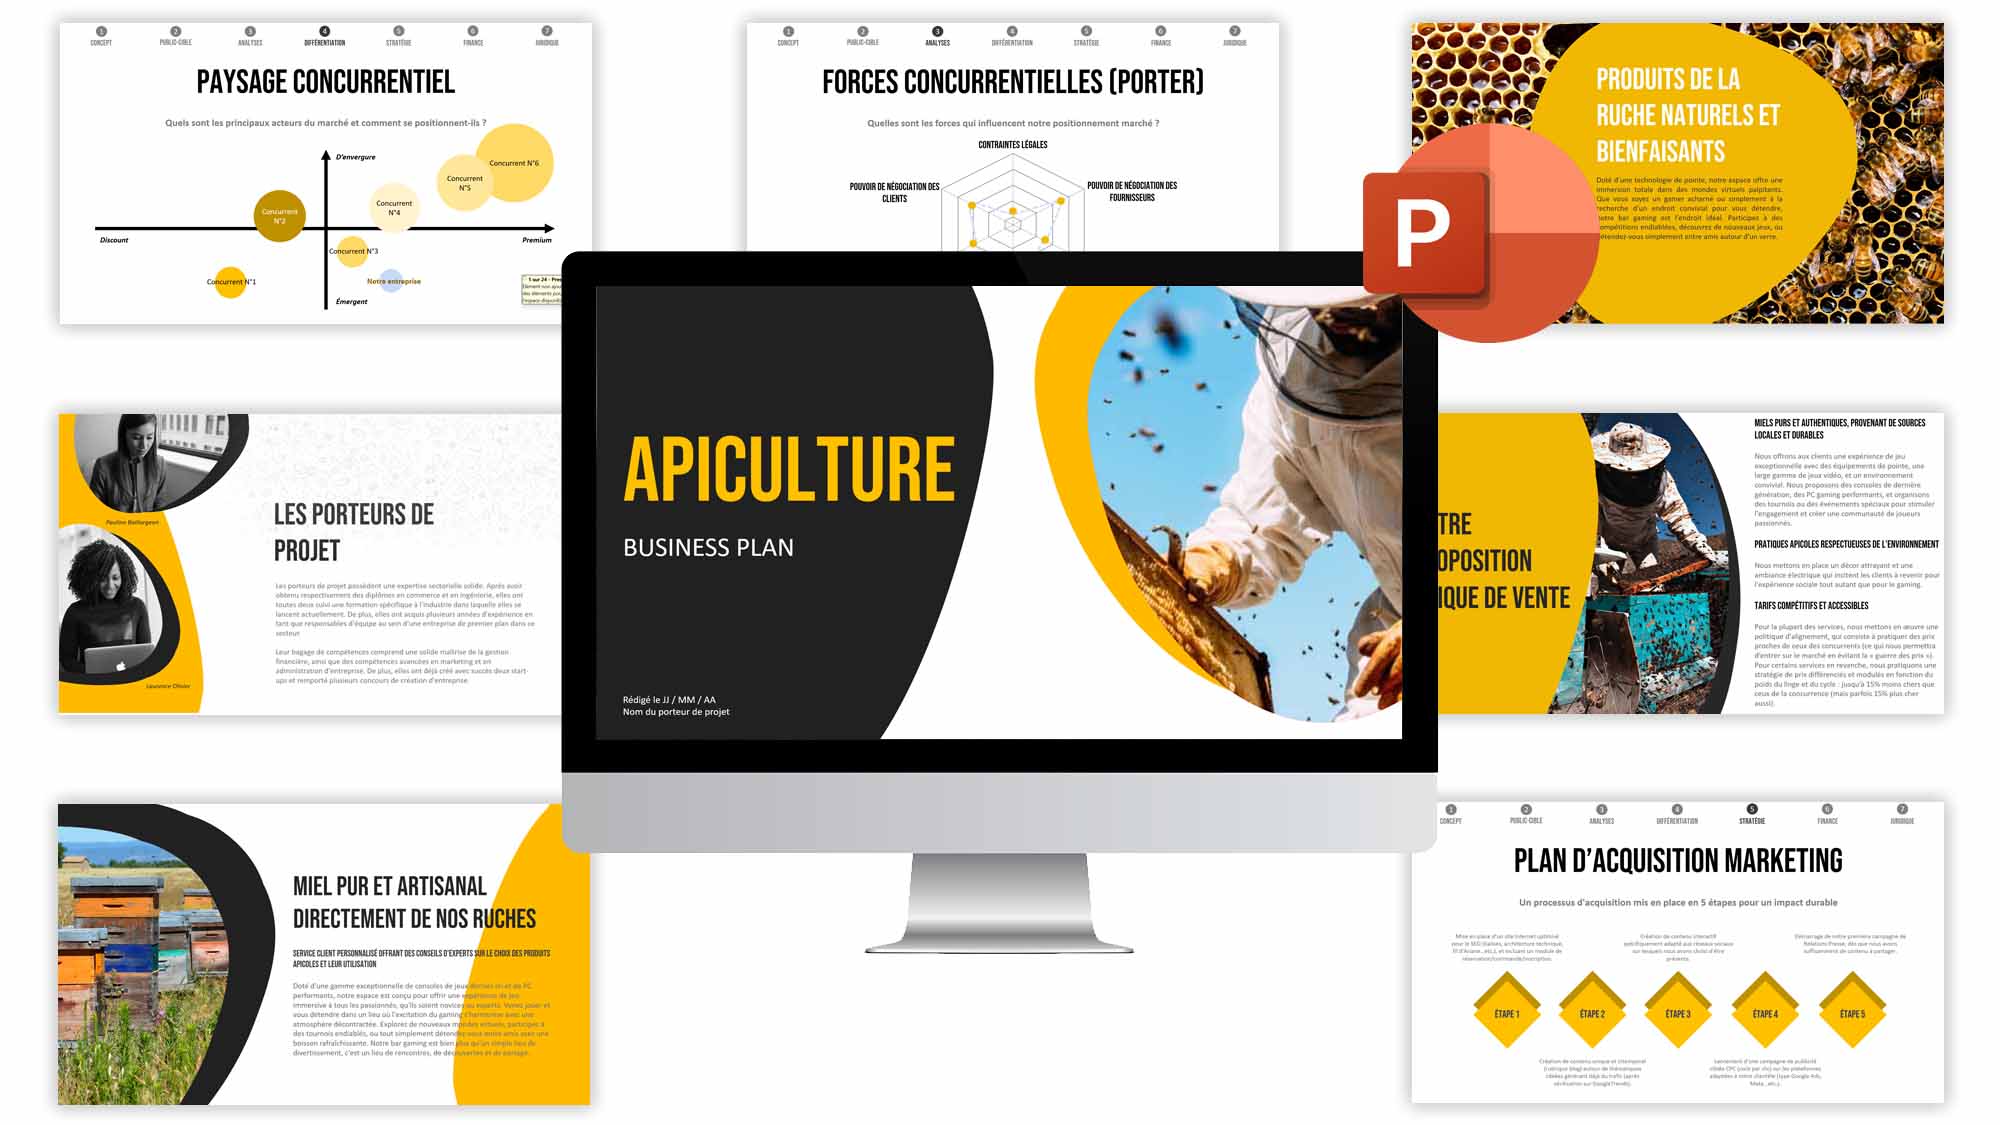 business plan apiculture pdf